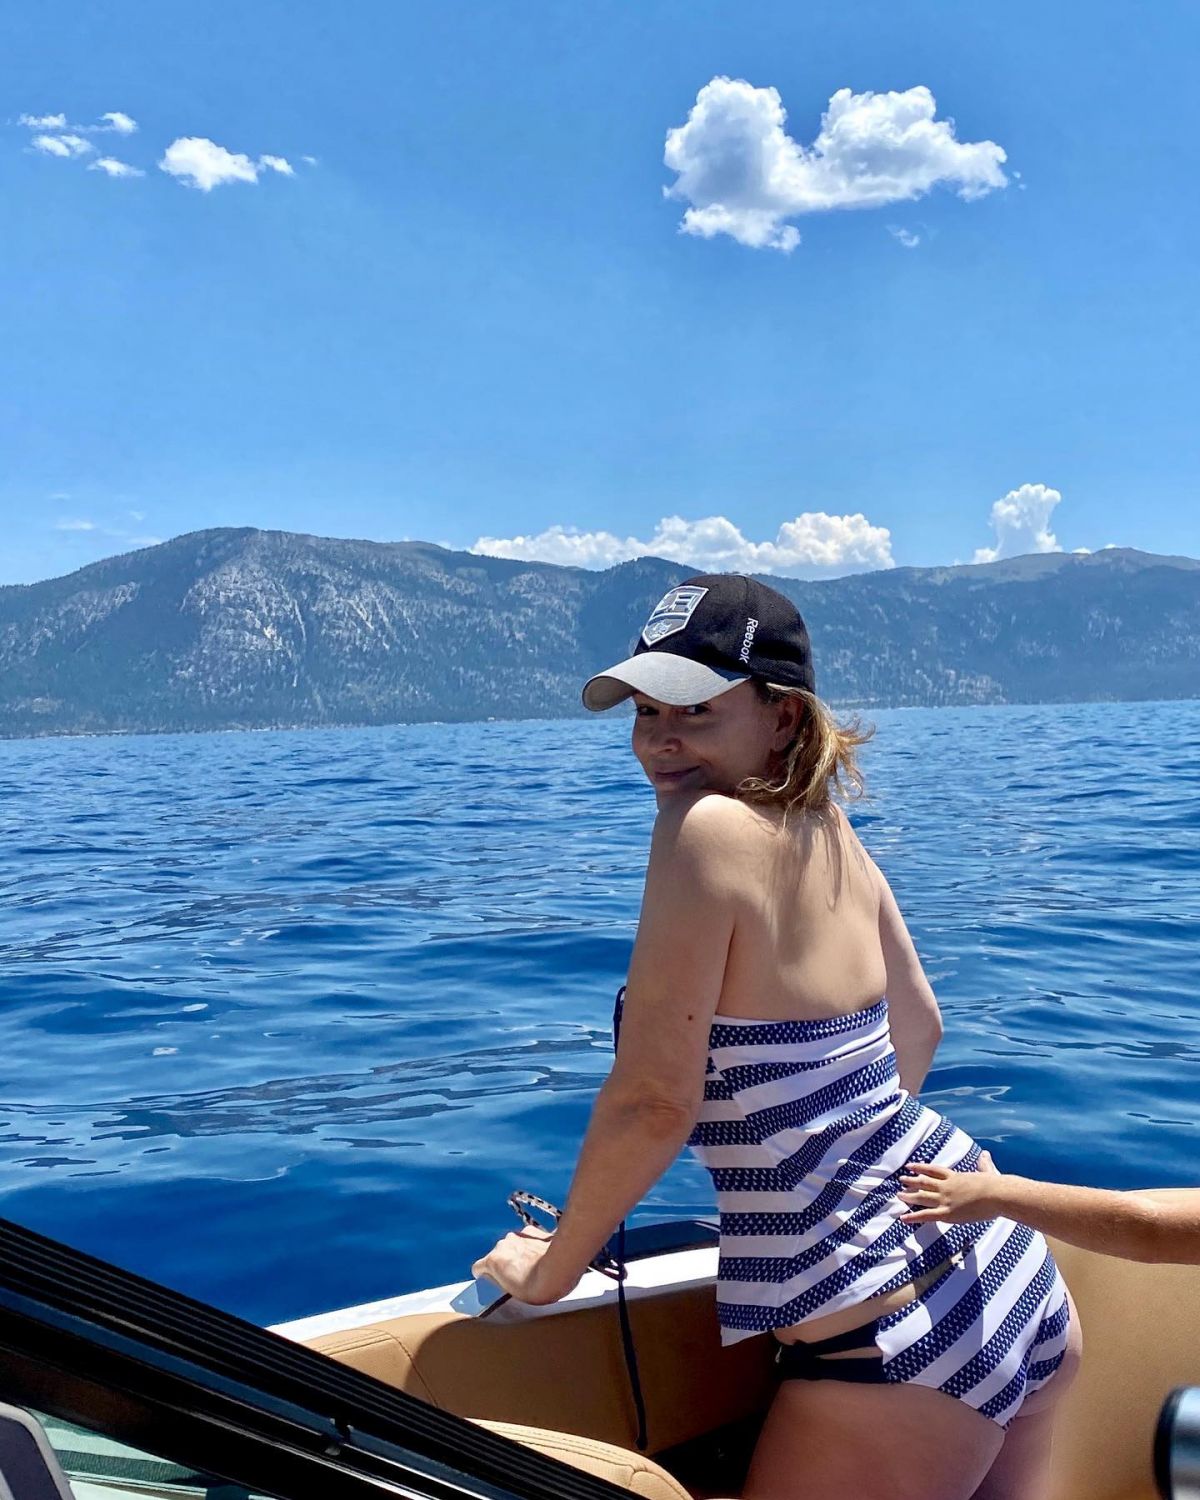 ALYSSA MILANO in Swimsuit at a Boat - Instagram Photos 07/20/2020.